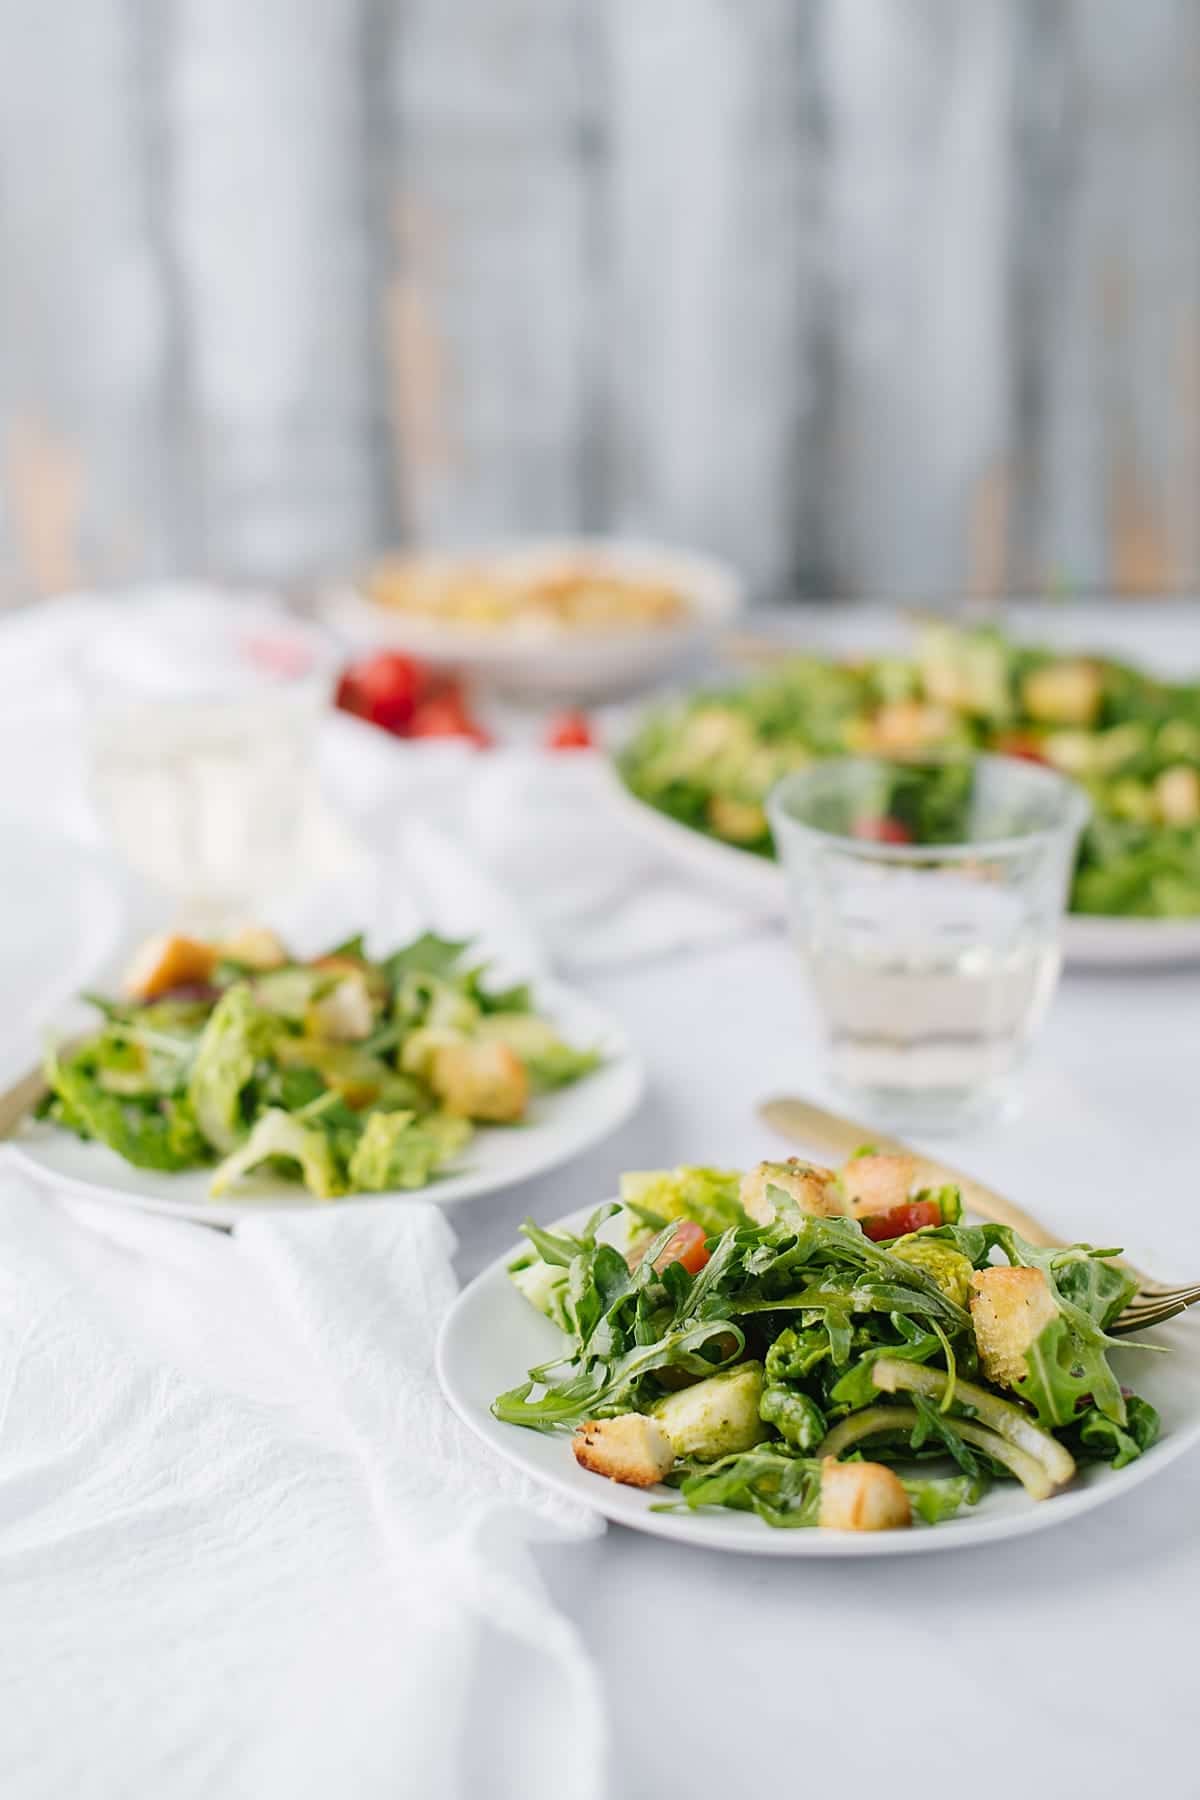 Arugula Caprese Salad with Lemon Basil Dressing and Homemade Croutons